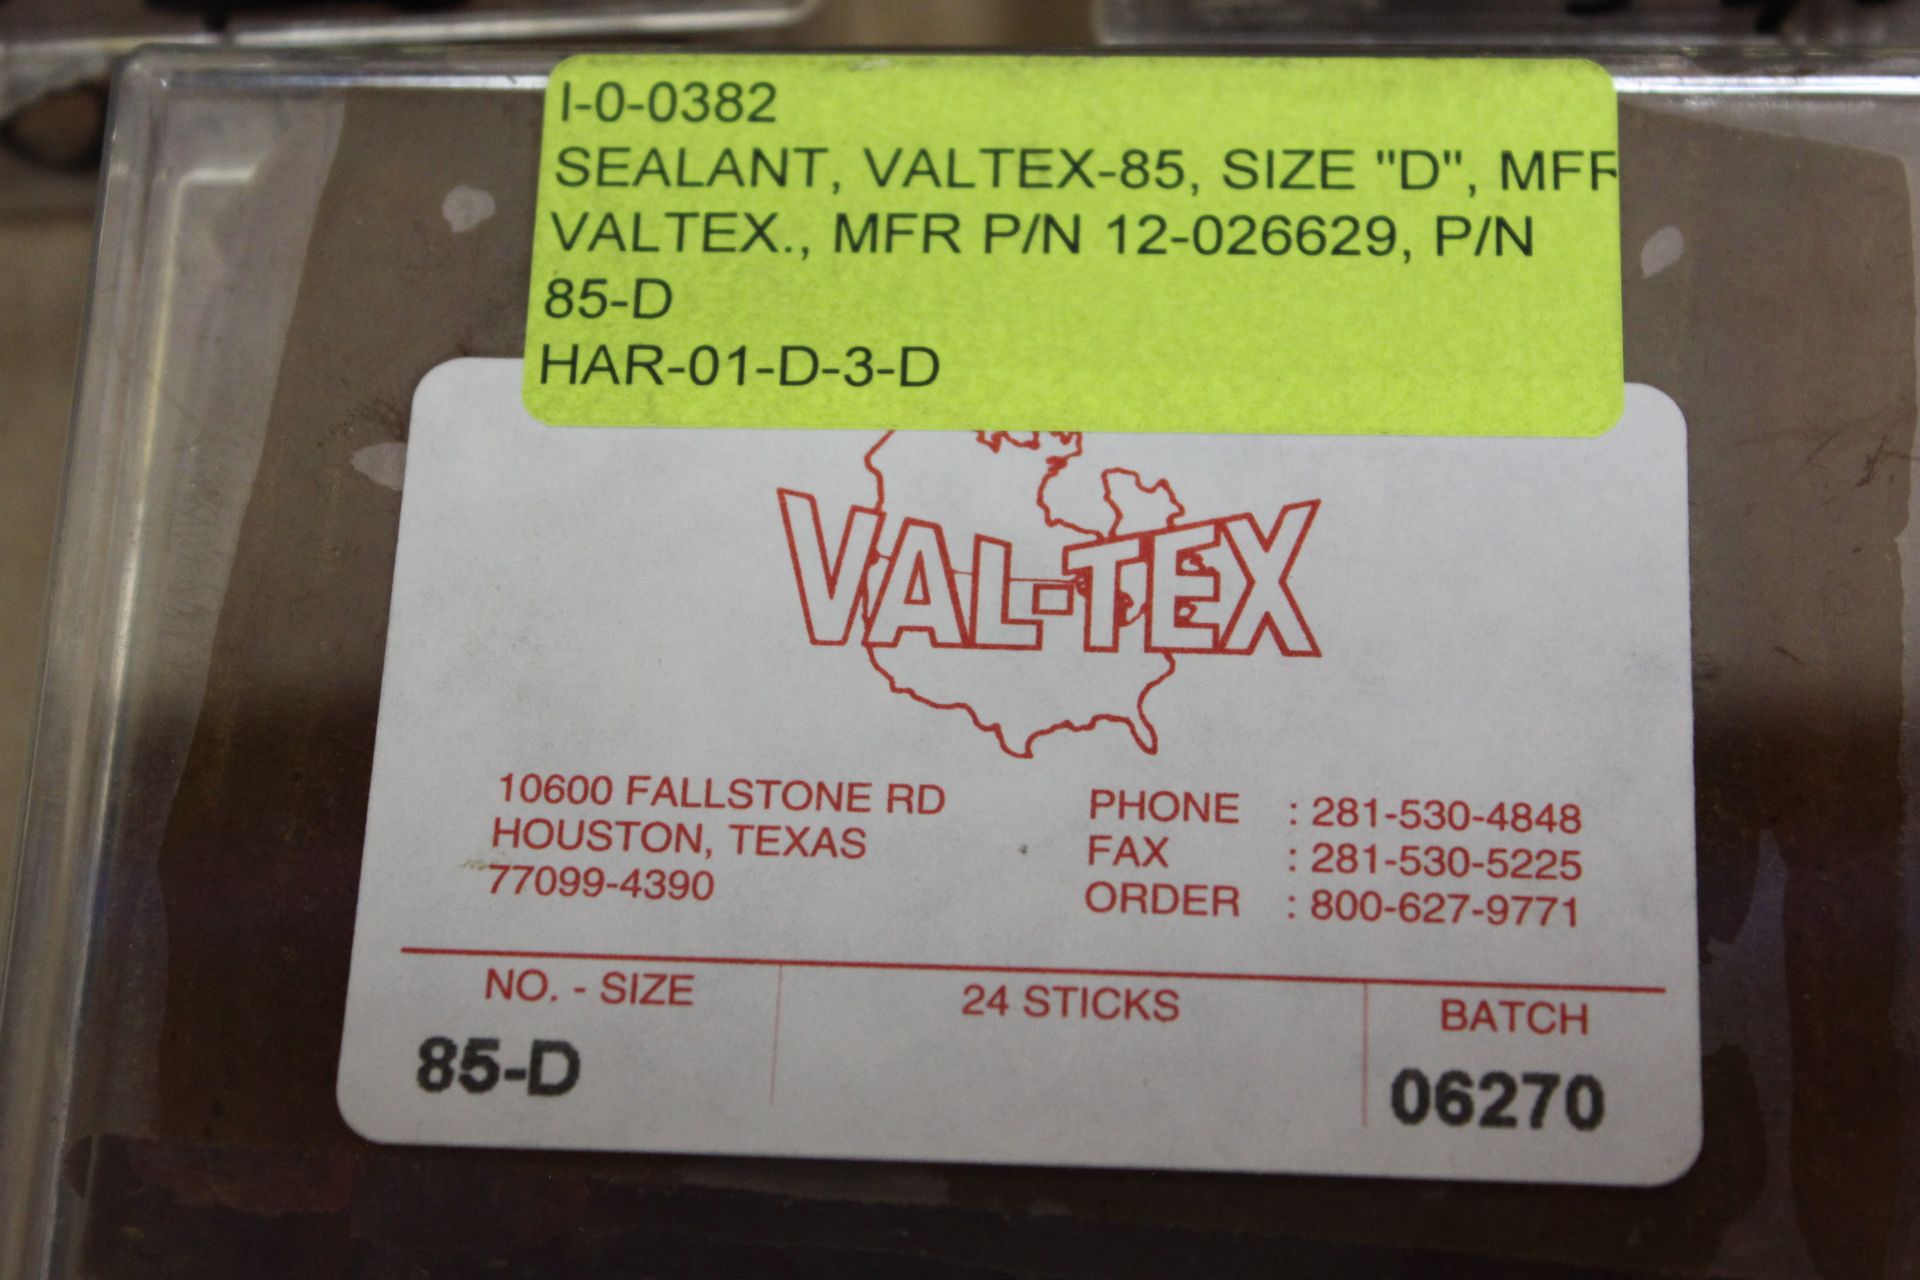 LOT OF 72 NEW VALTEX SEALANT STICKS - Image 2 of 2